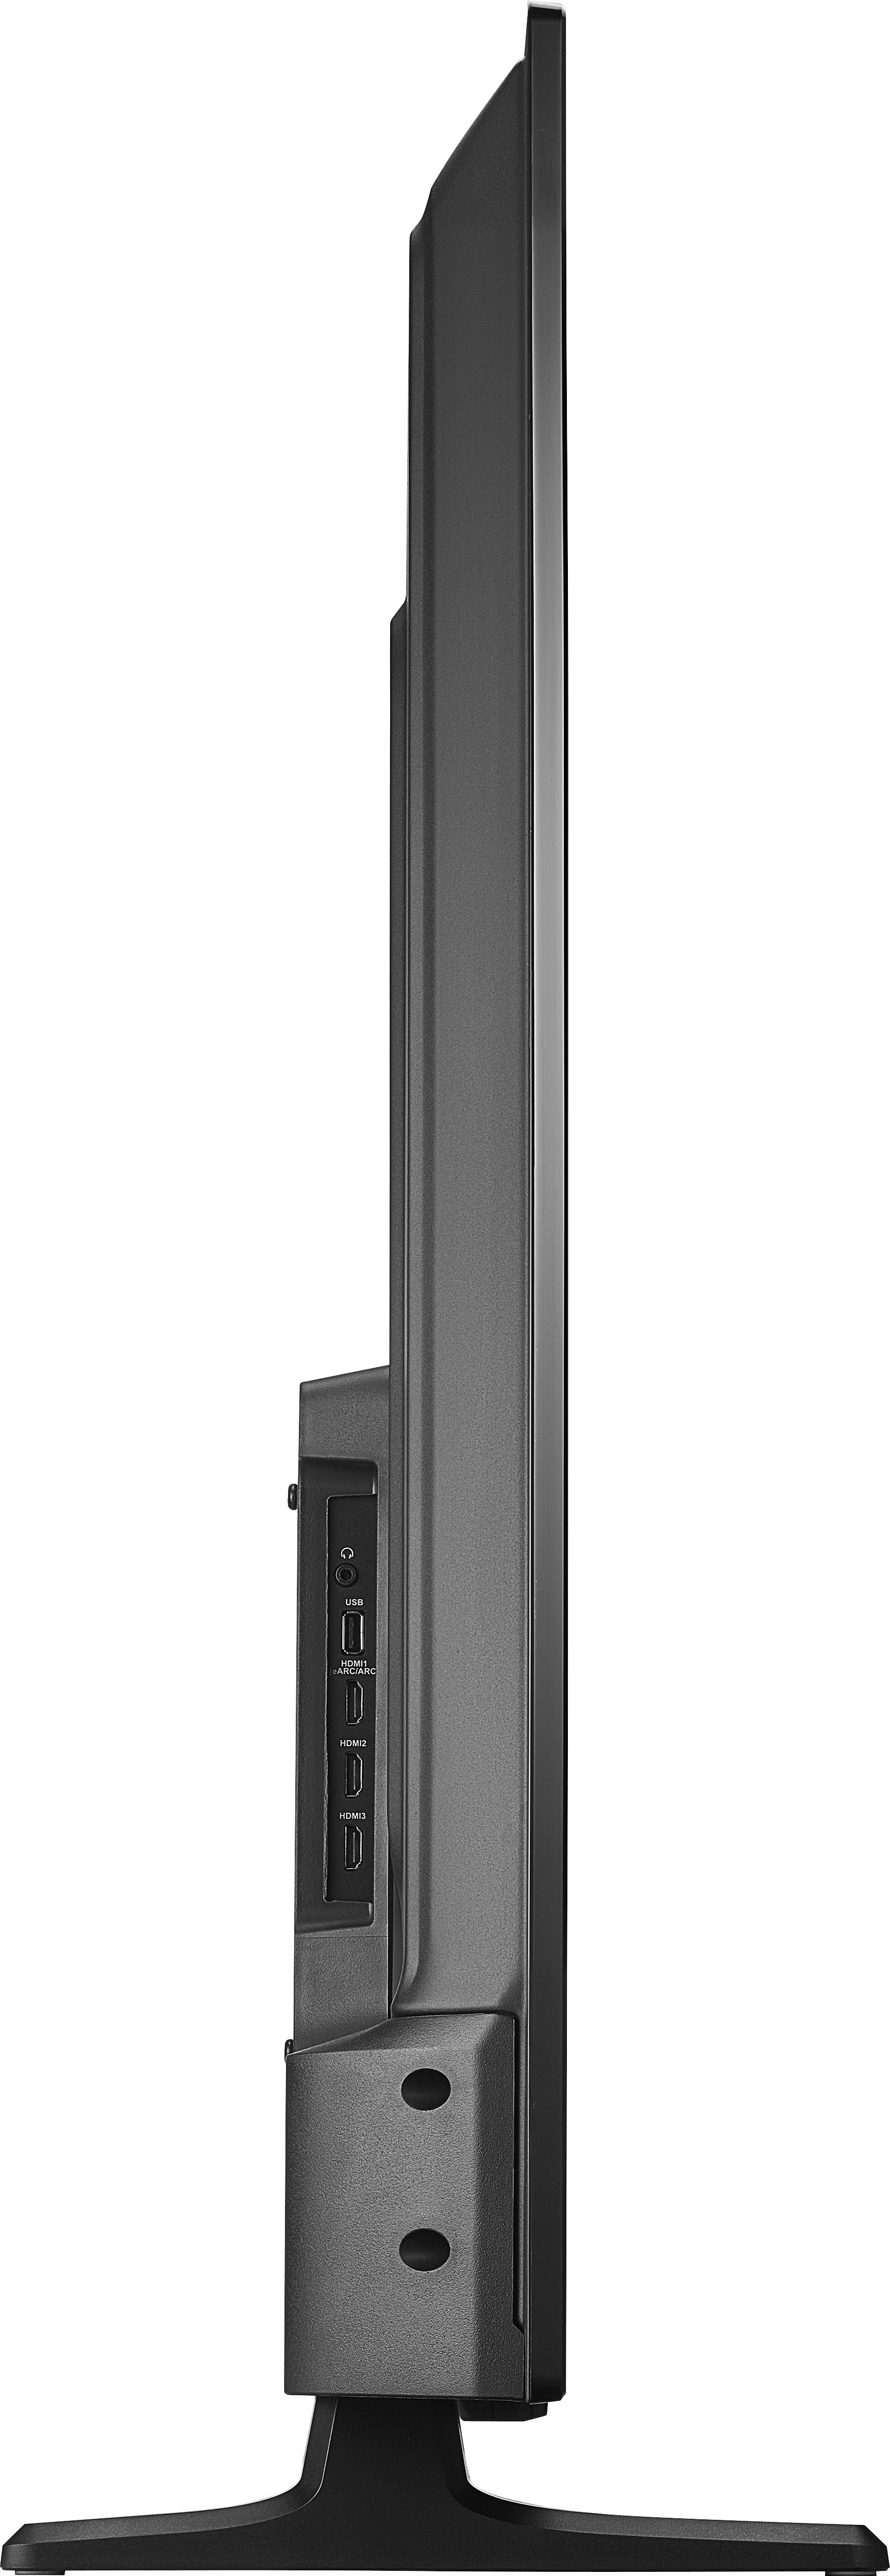 Buy: Insignia™ 55" Class F30 Series LED 4K UHD TV NS-55DF710NA21